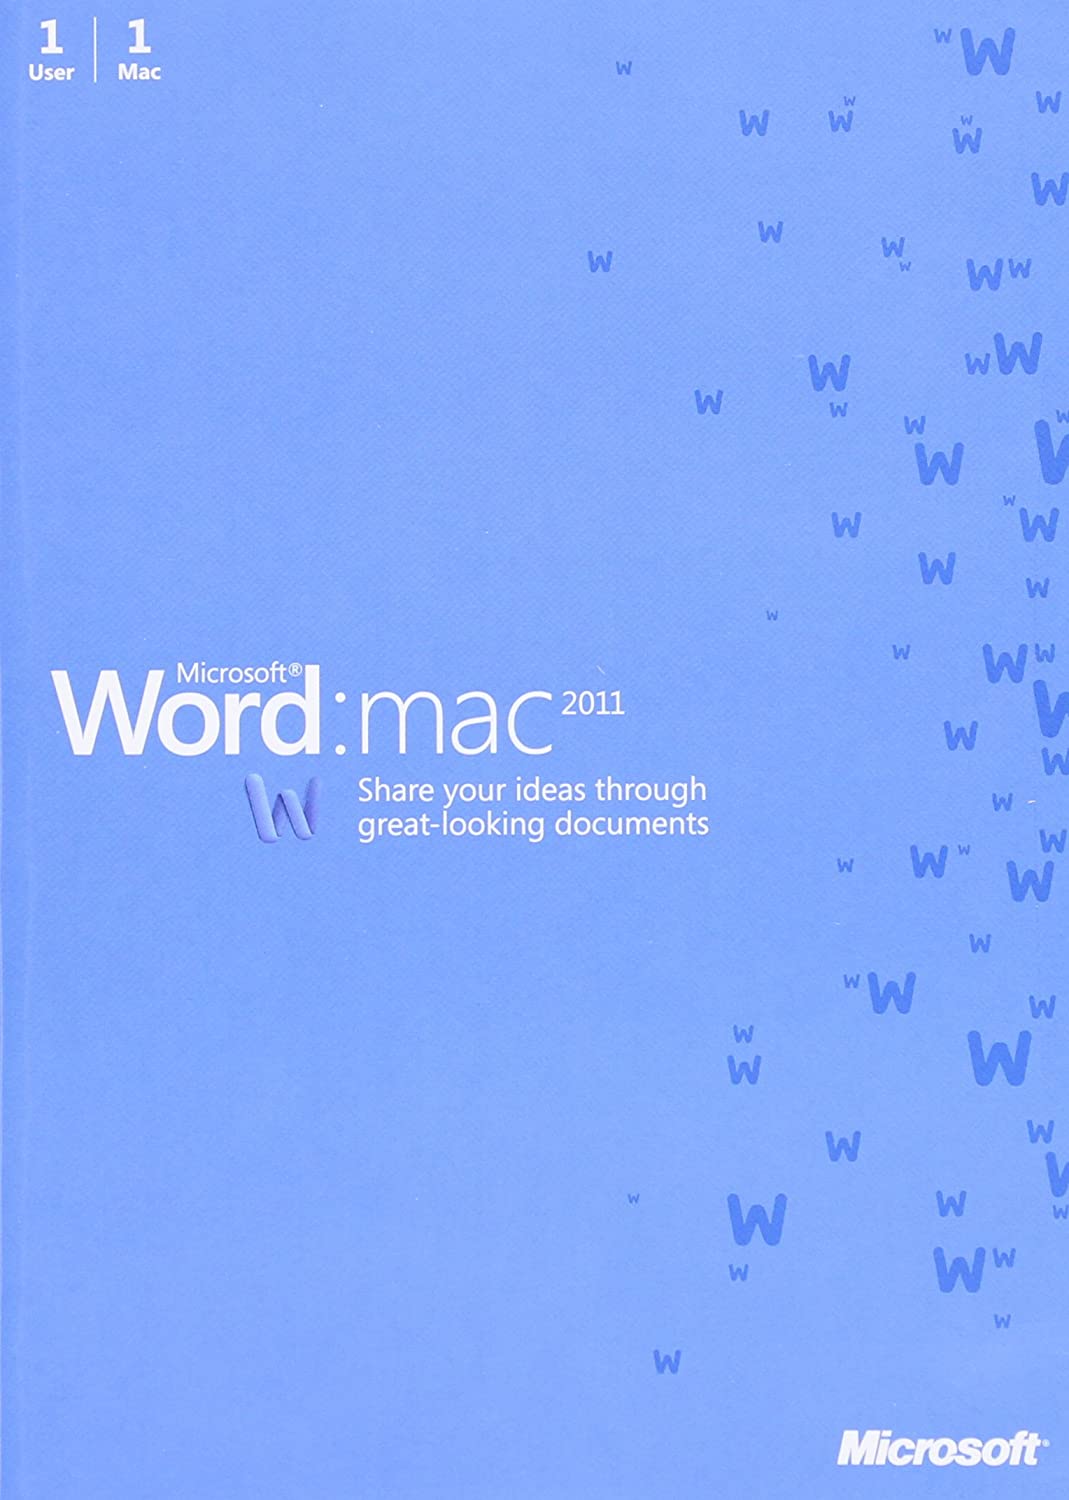 word 2011 for mac help